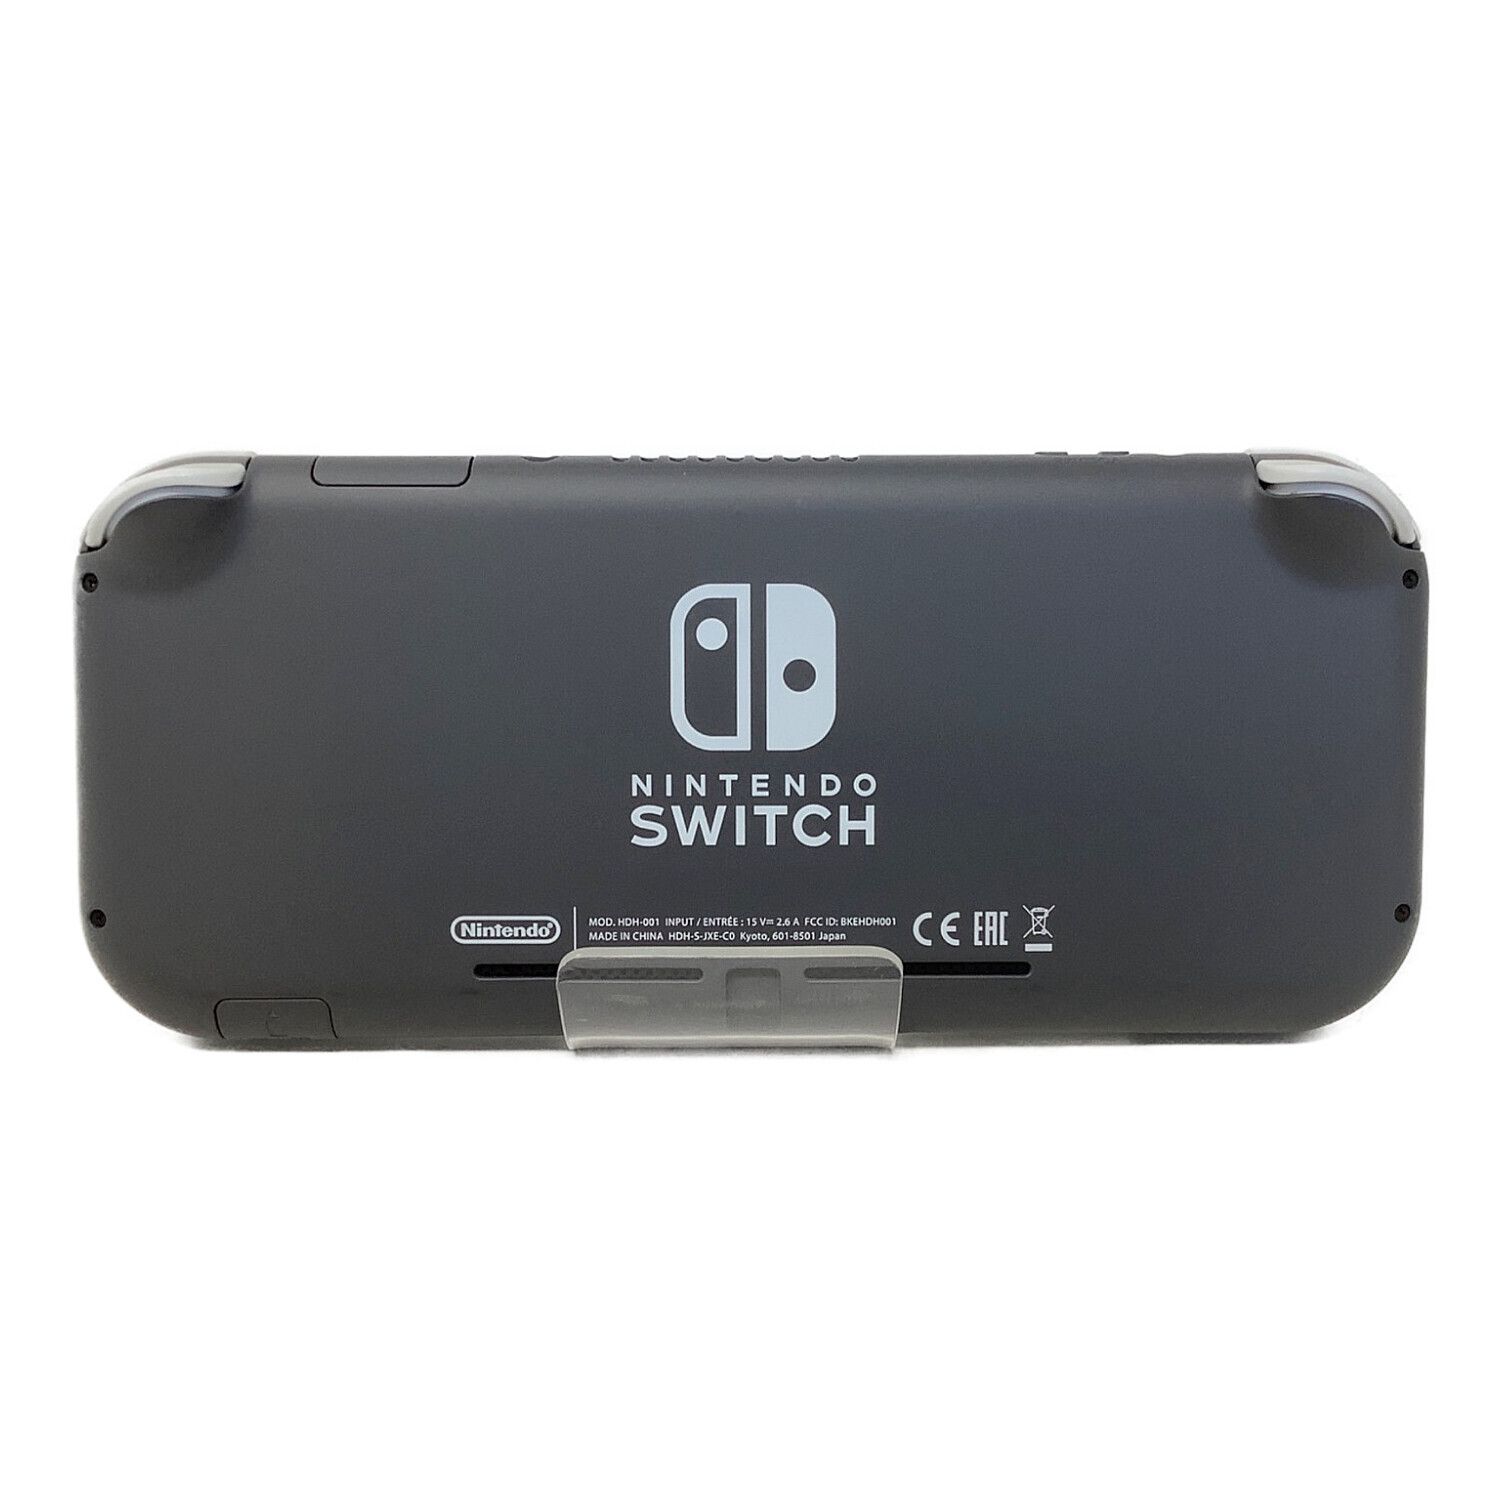 Nintendo (ニンテンドウ) Nintendo Switch Lite 2019年モデル